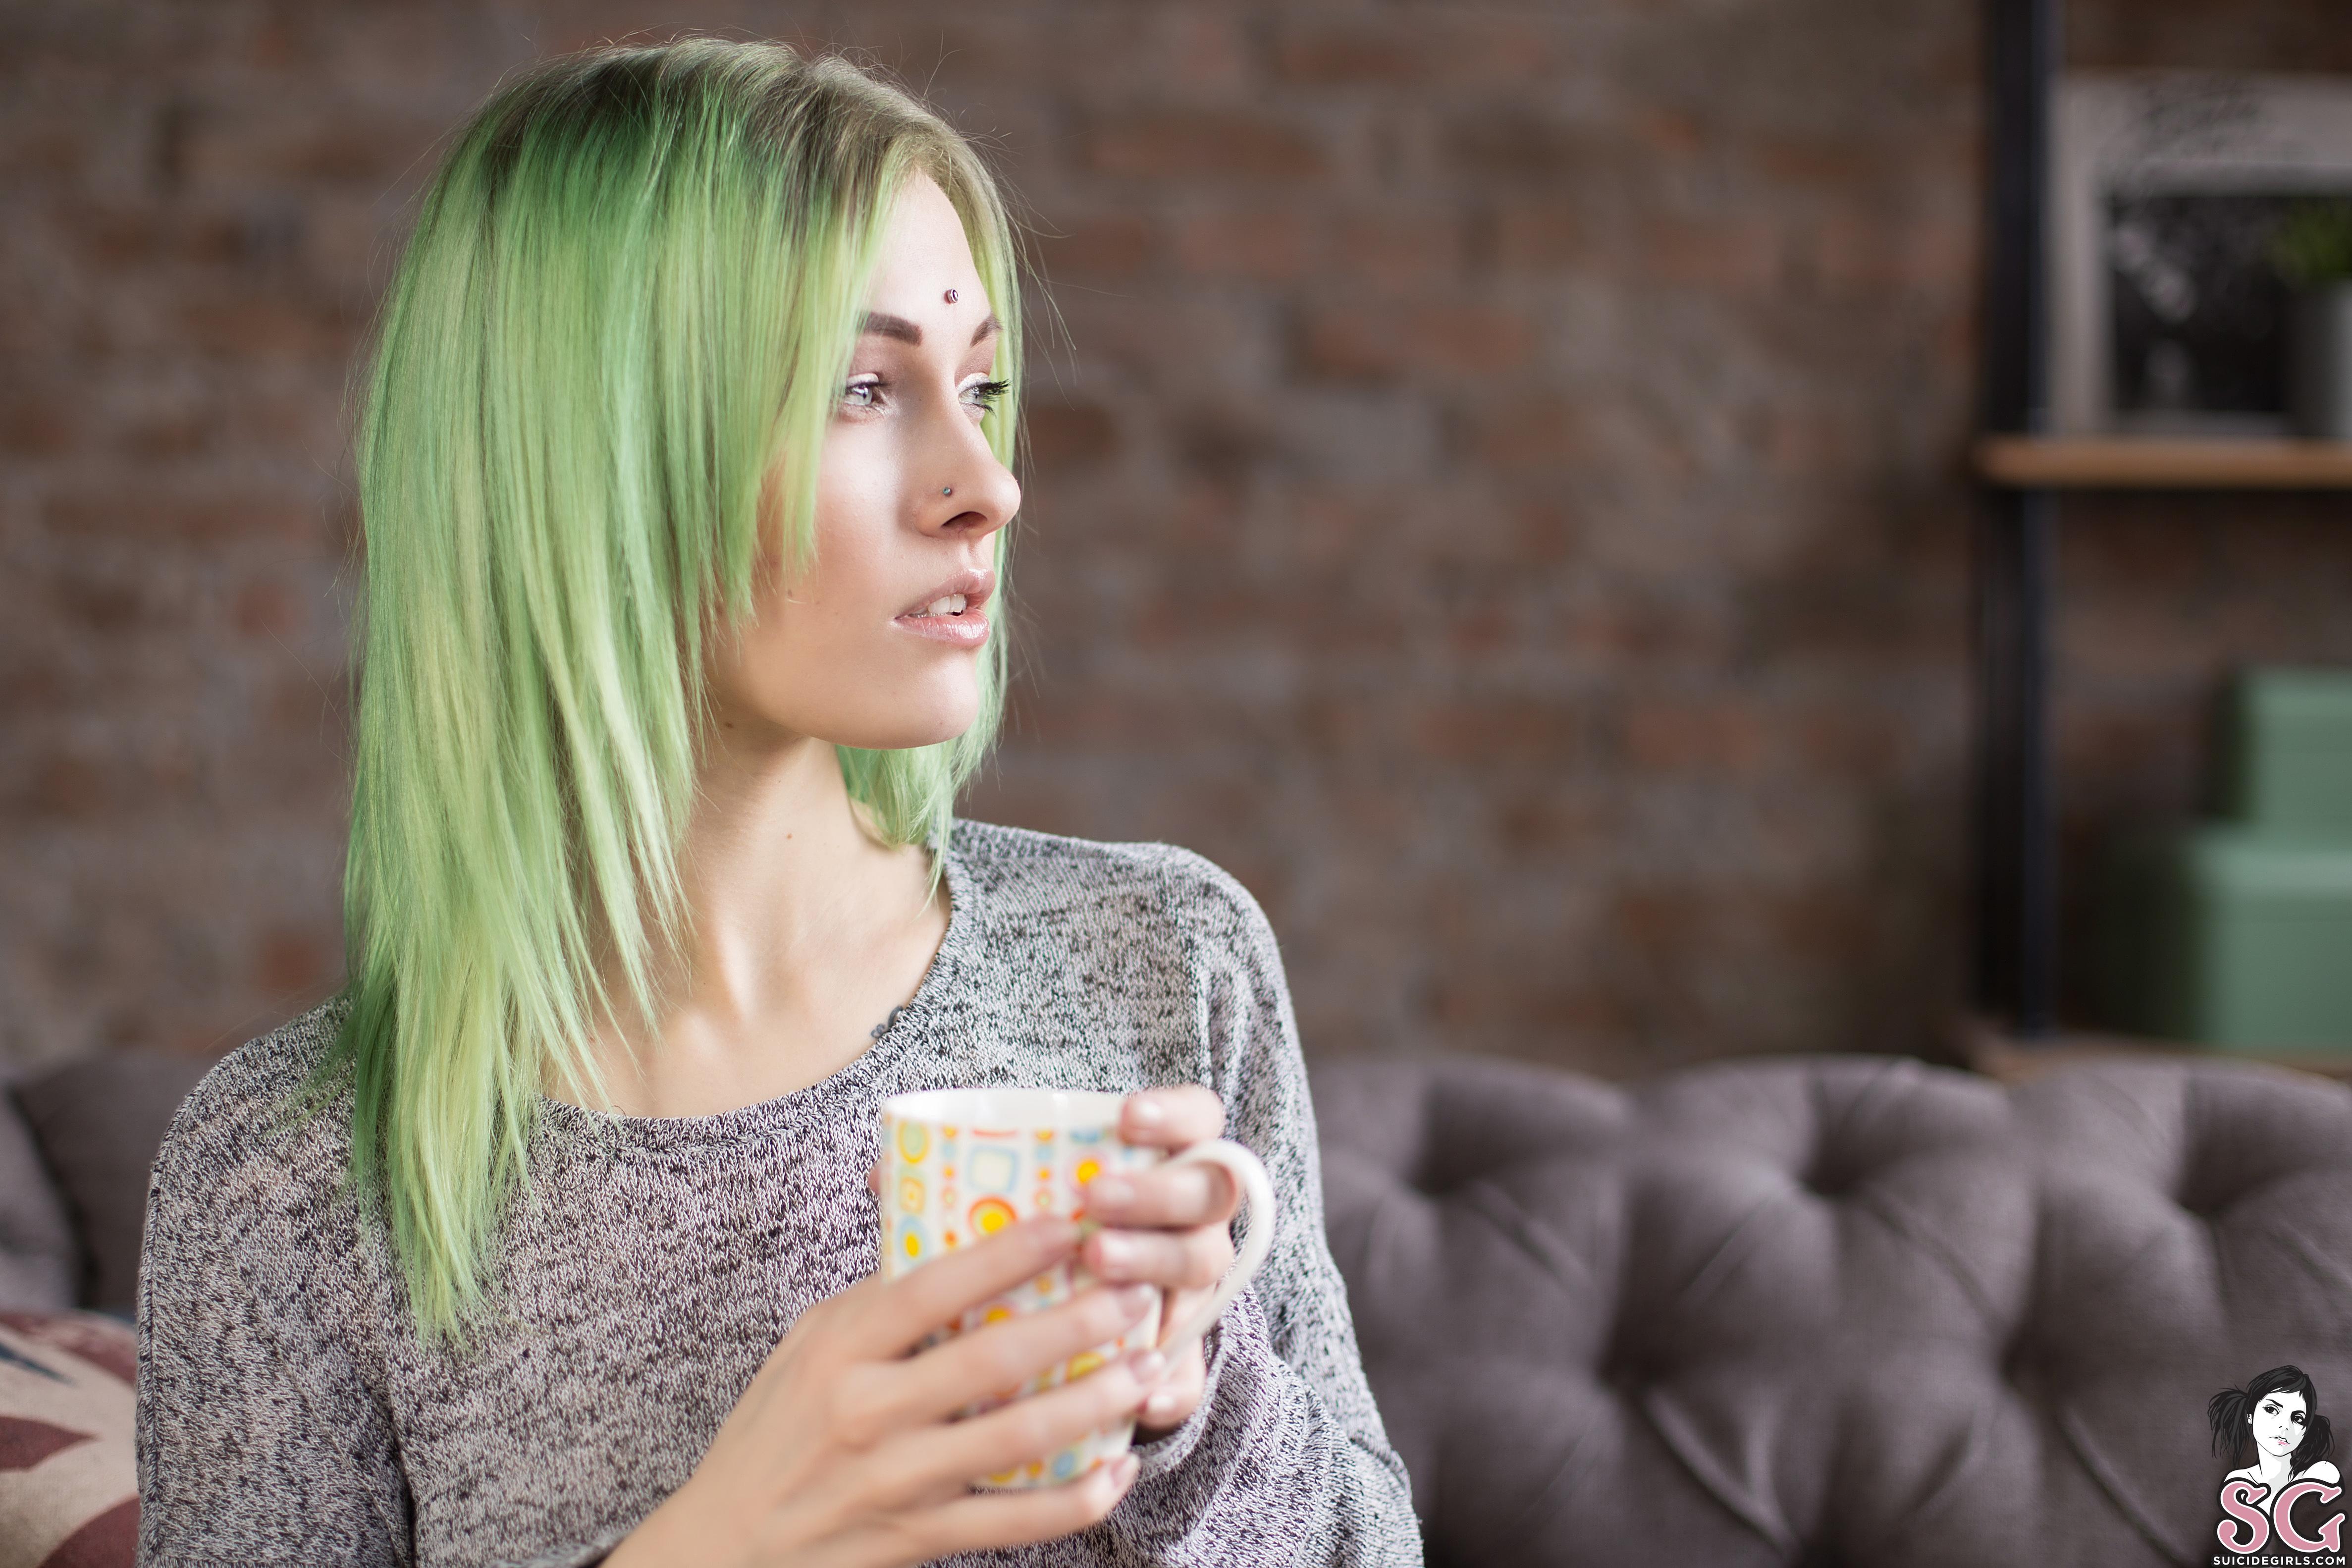 Women Model Dyed Hair Green Hair Sweater Couch Cup Looking Away Depth Of Field Pierced Women